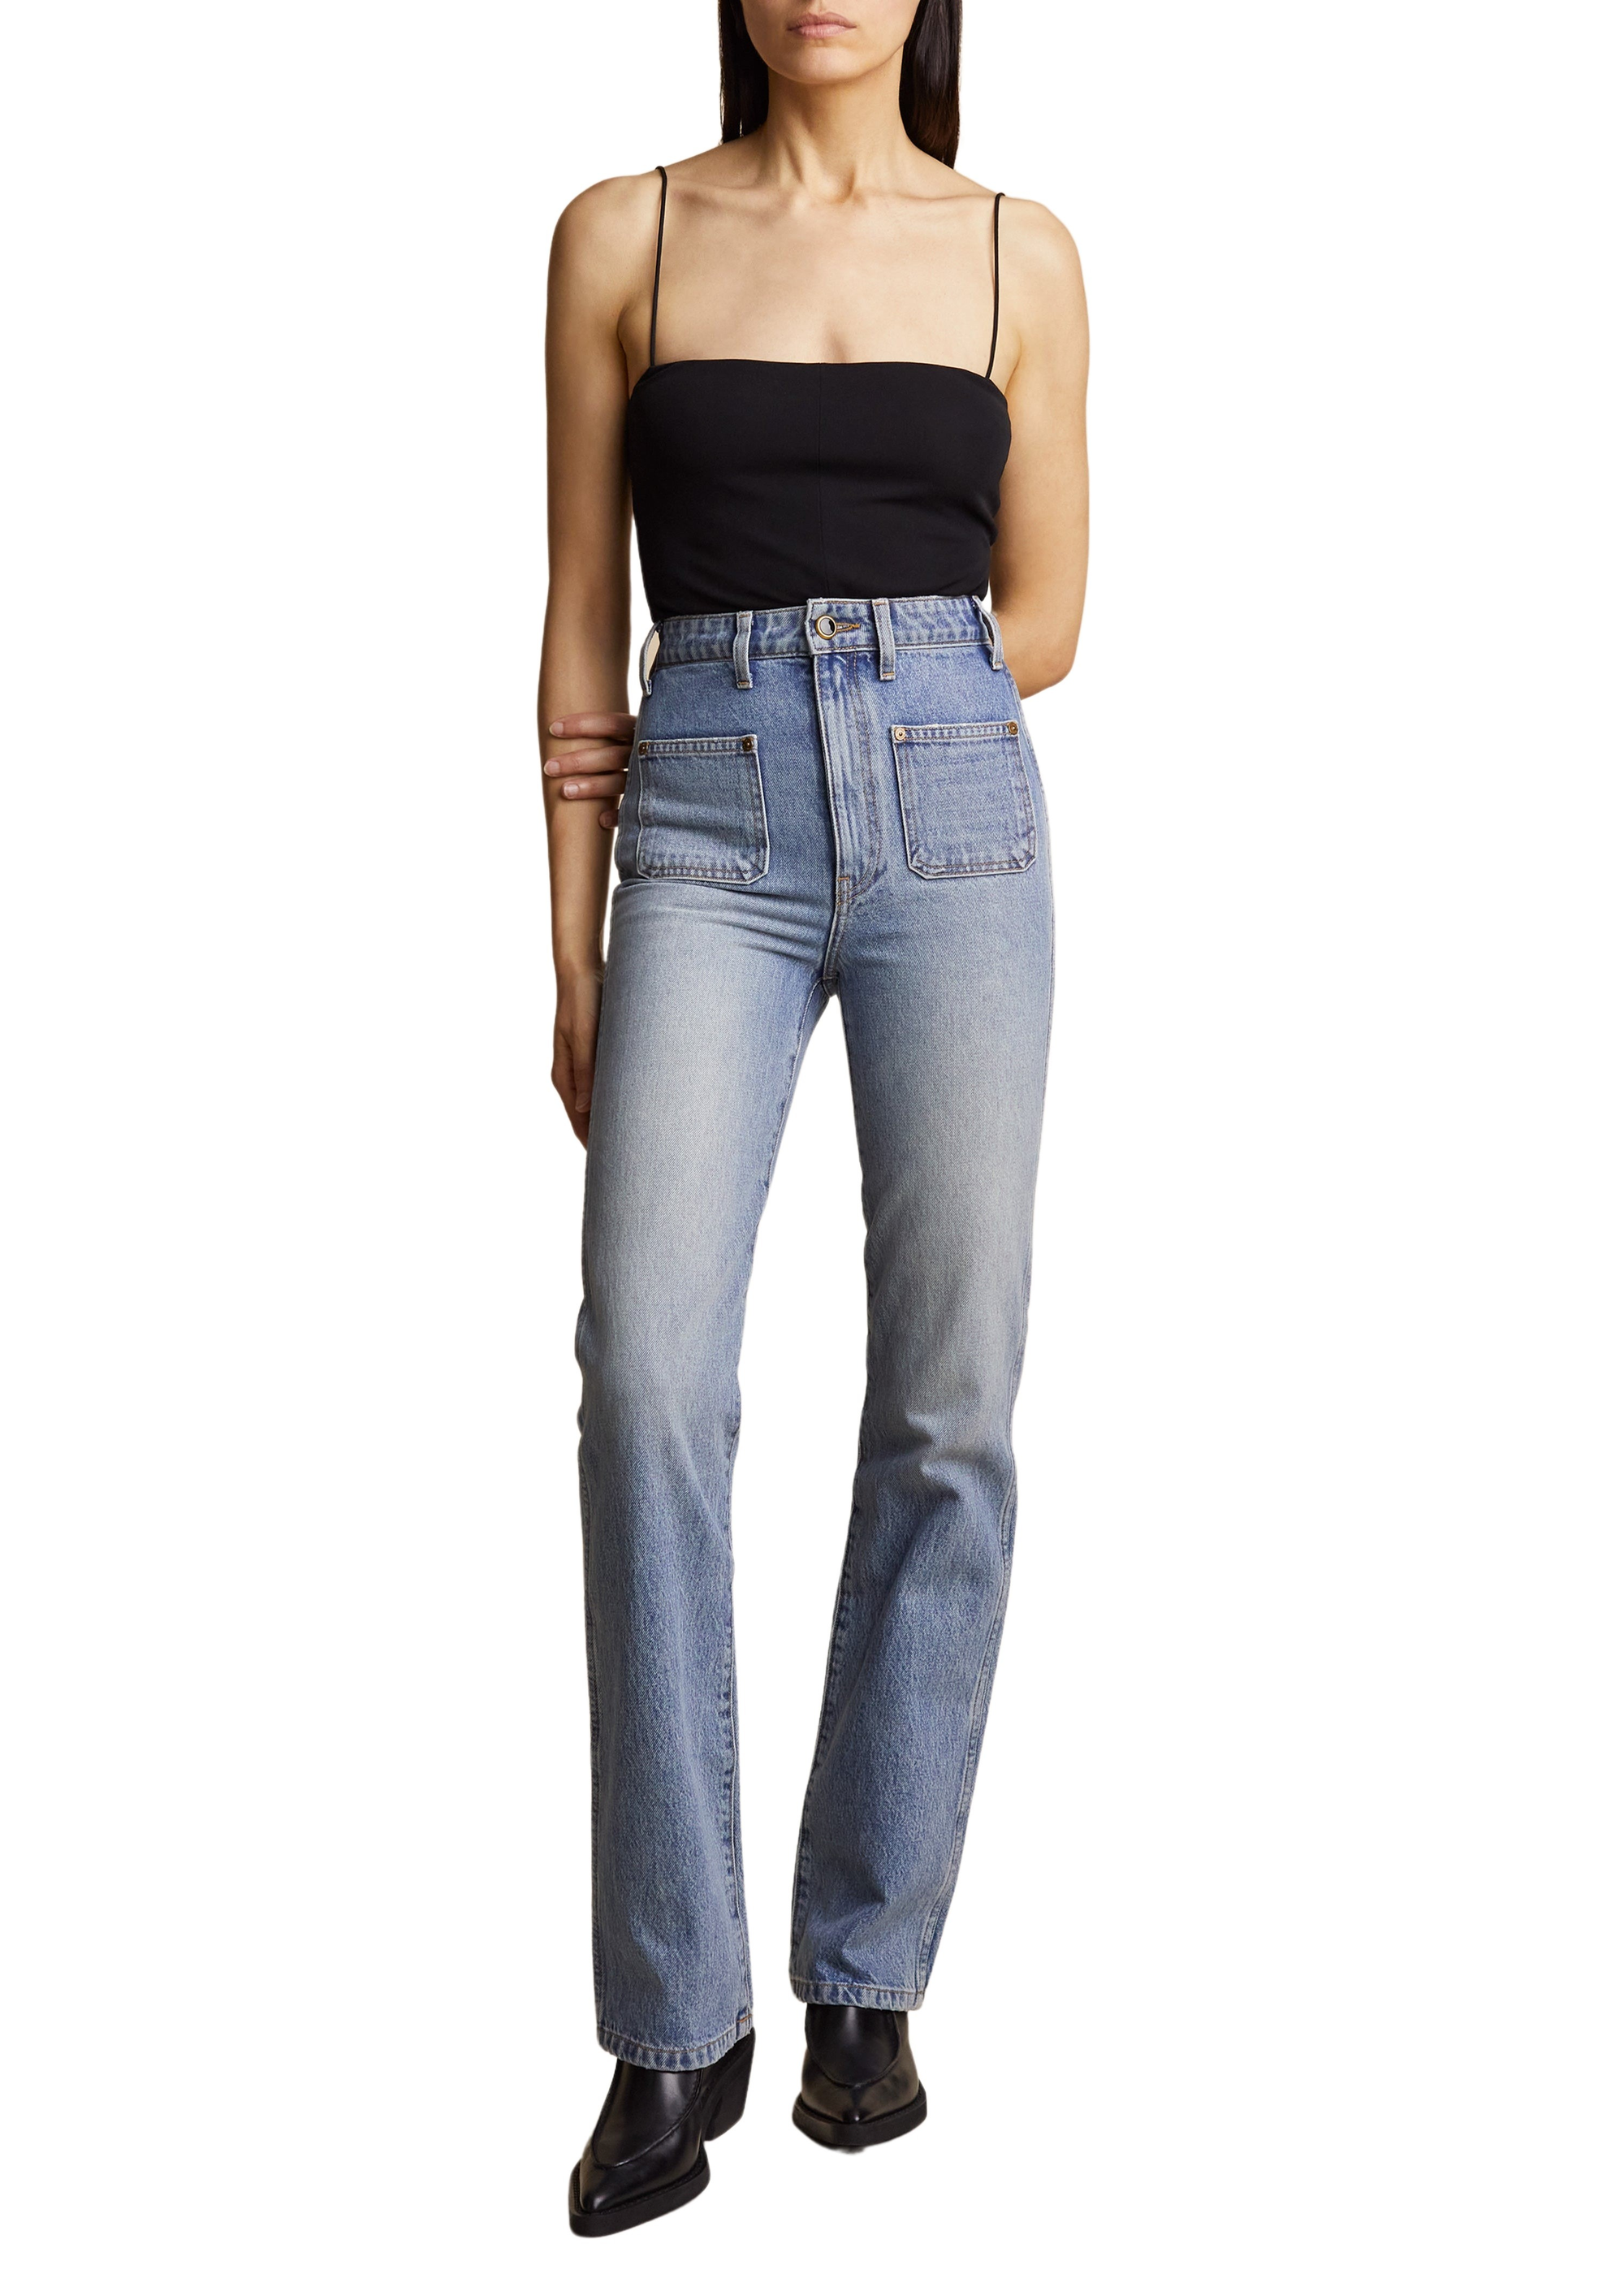 Isabella jeans - Santa Cruz